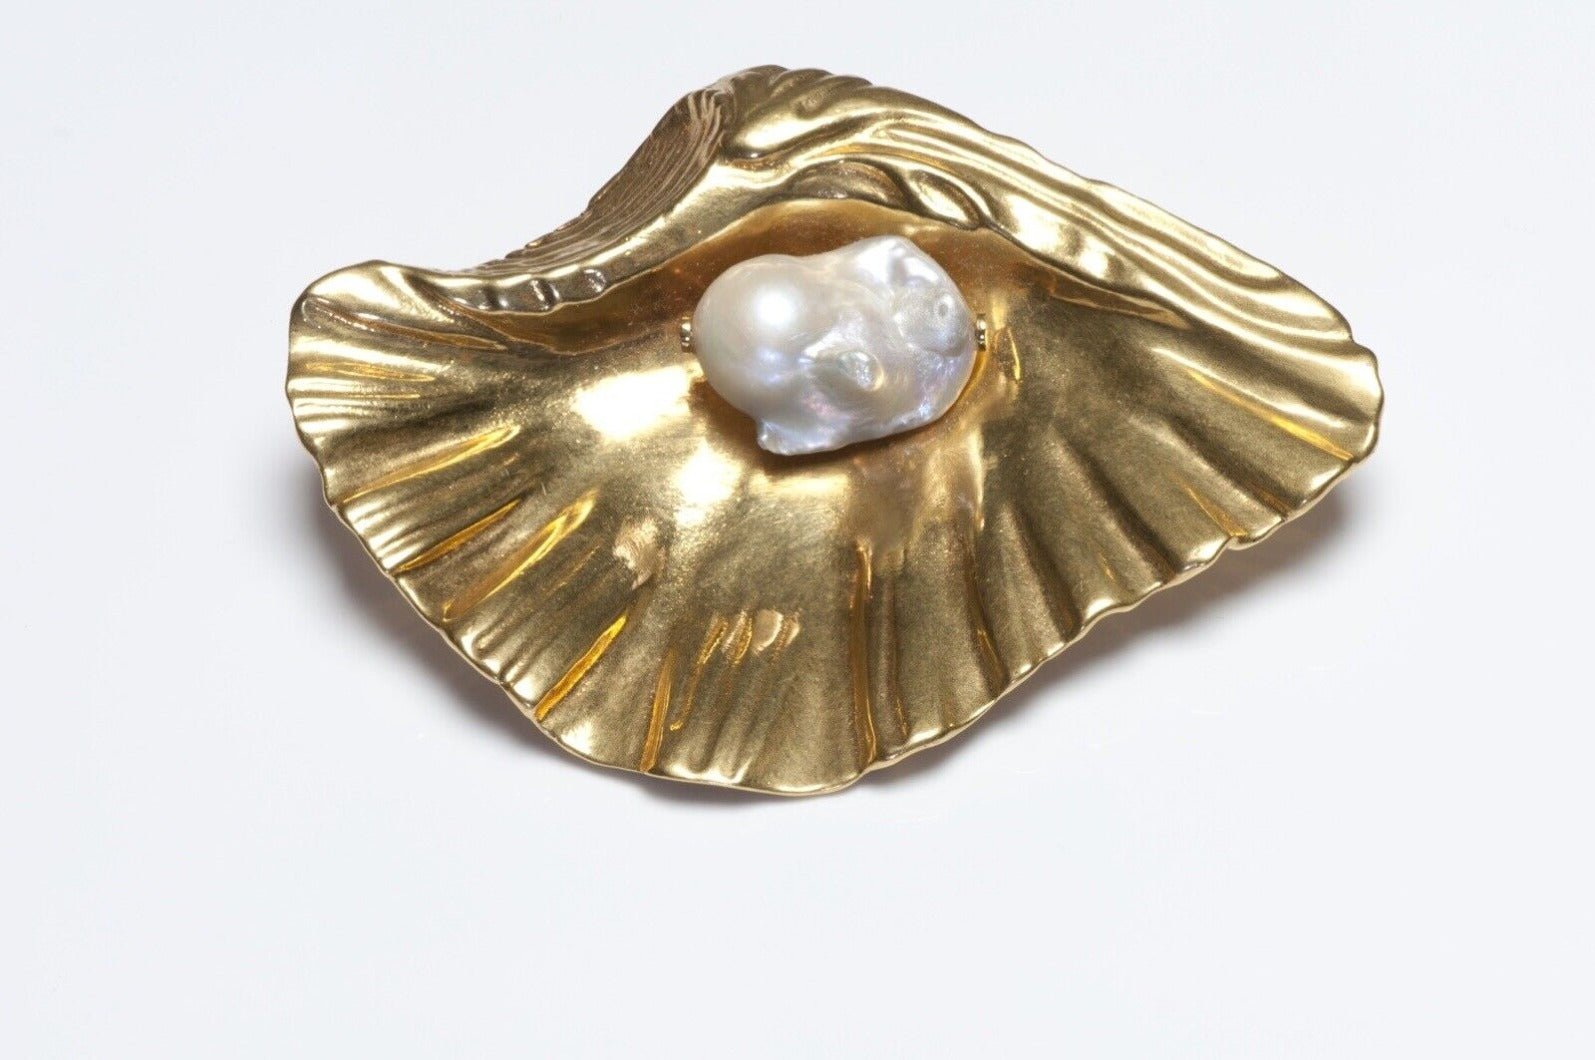 Sonia Rykiel Paris Baroque Pearl Oyster Shell Brooch